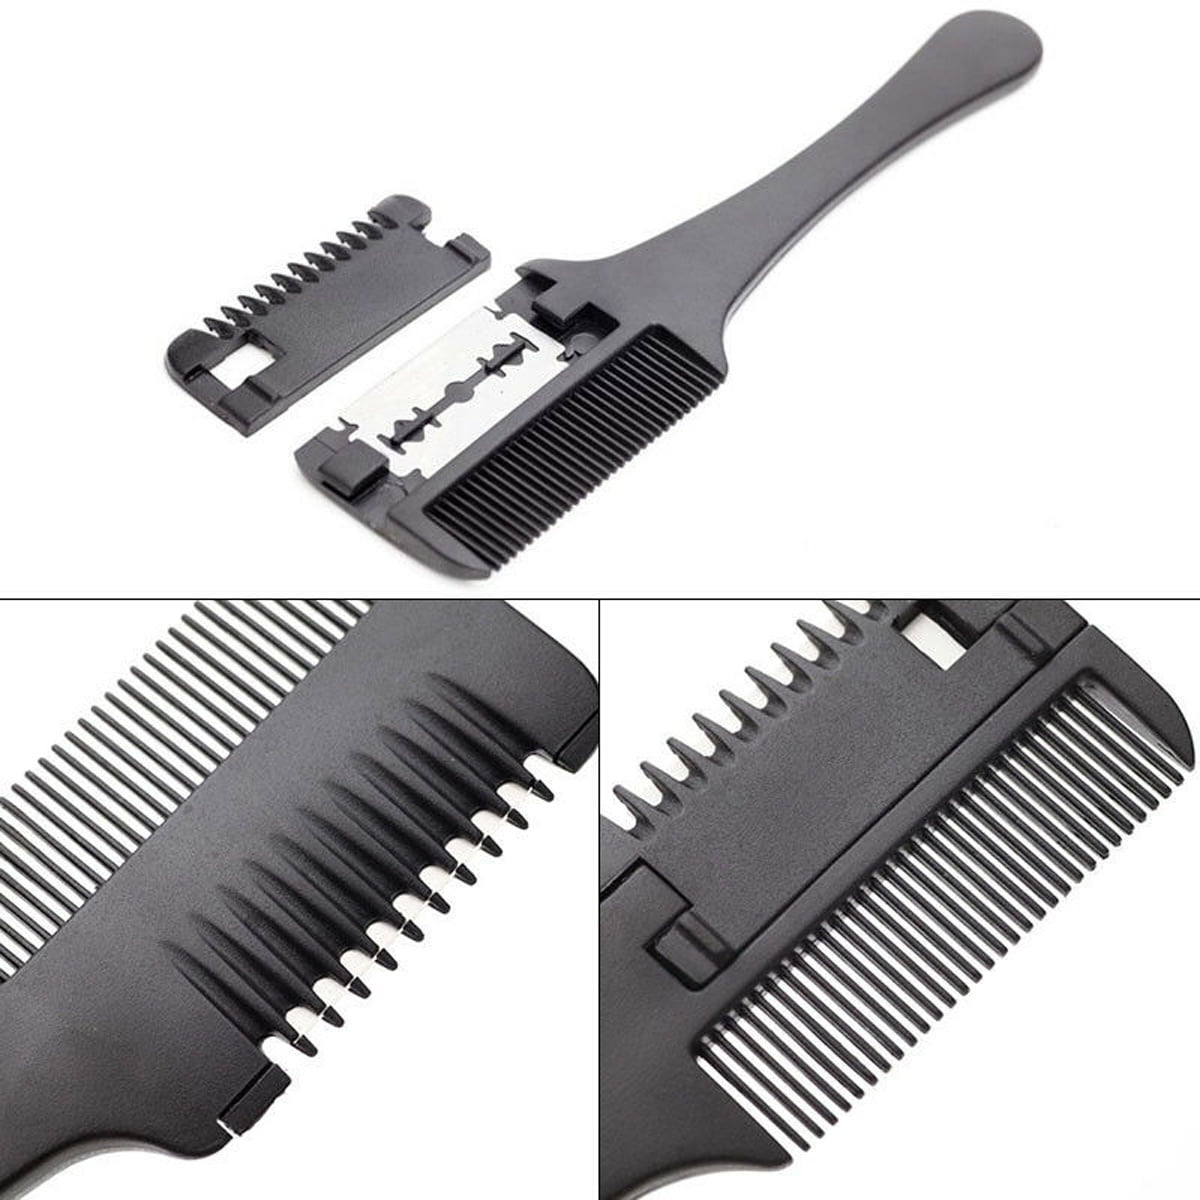 trim comb hair trimmer